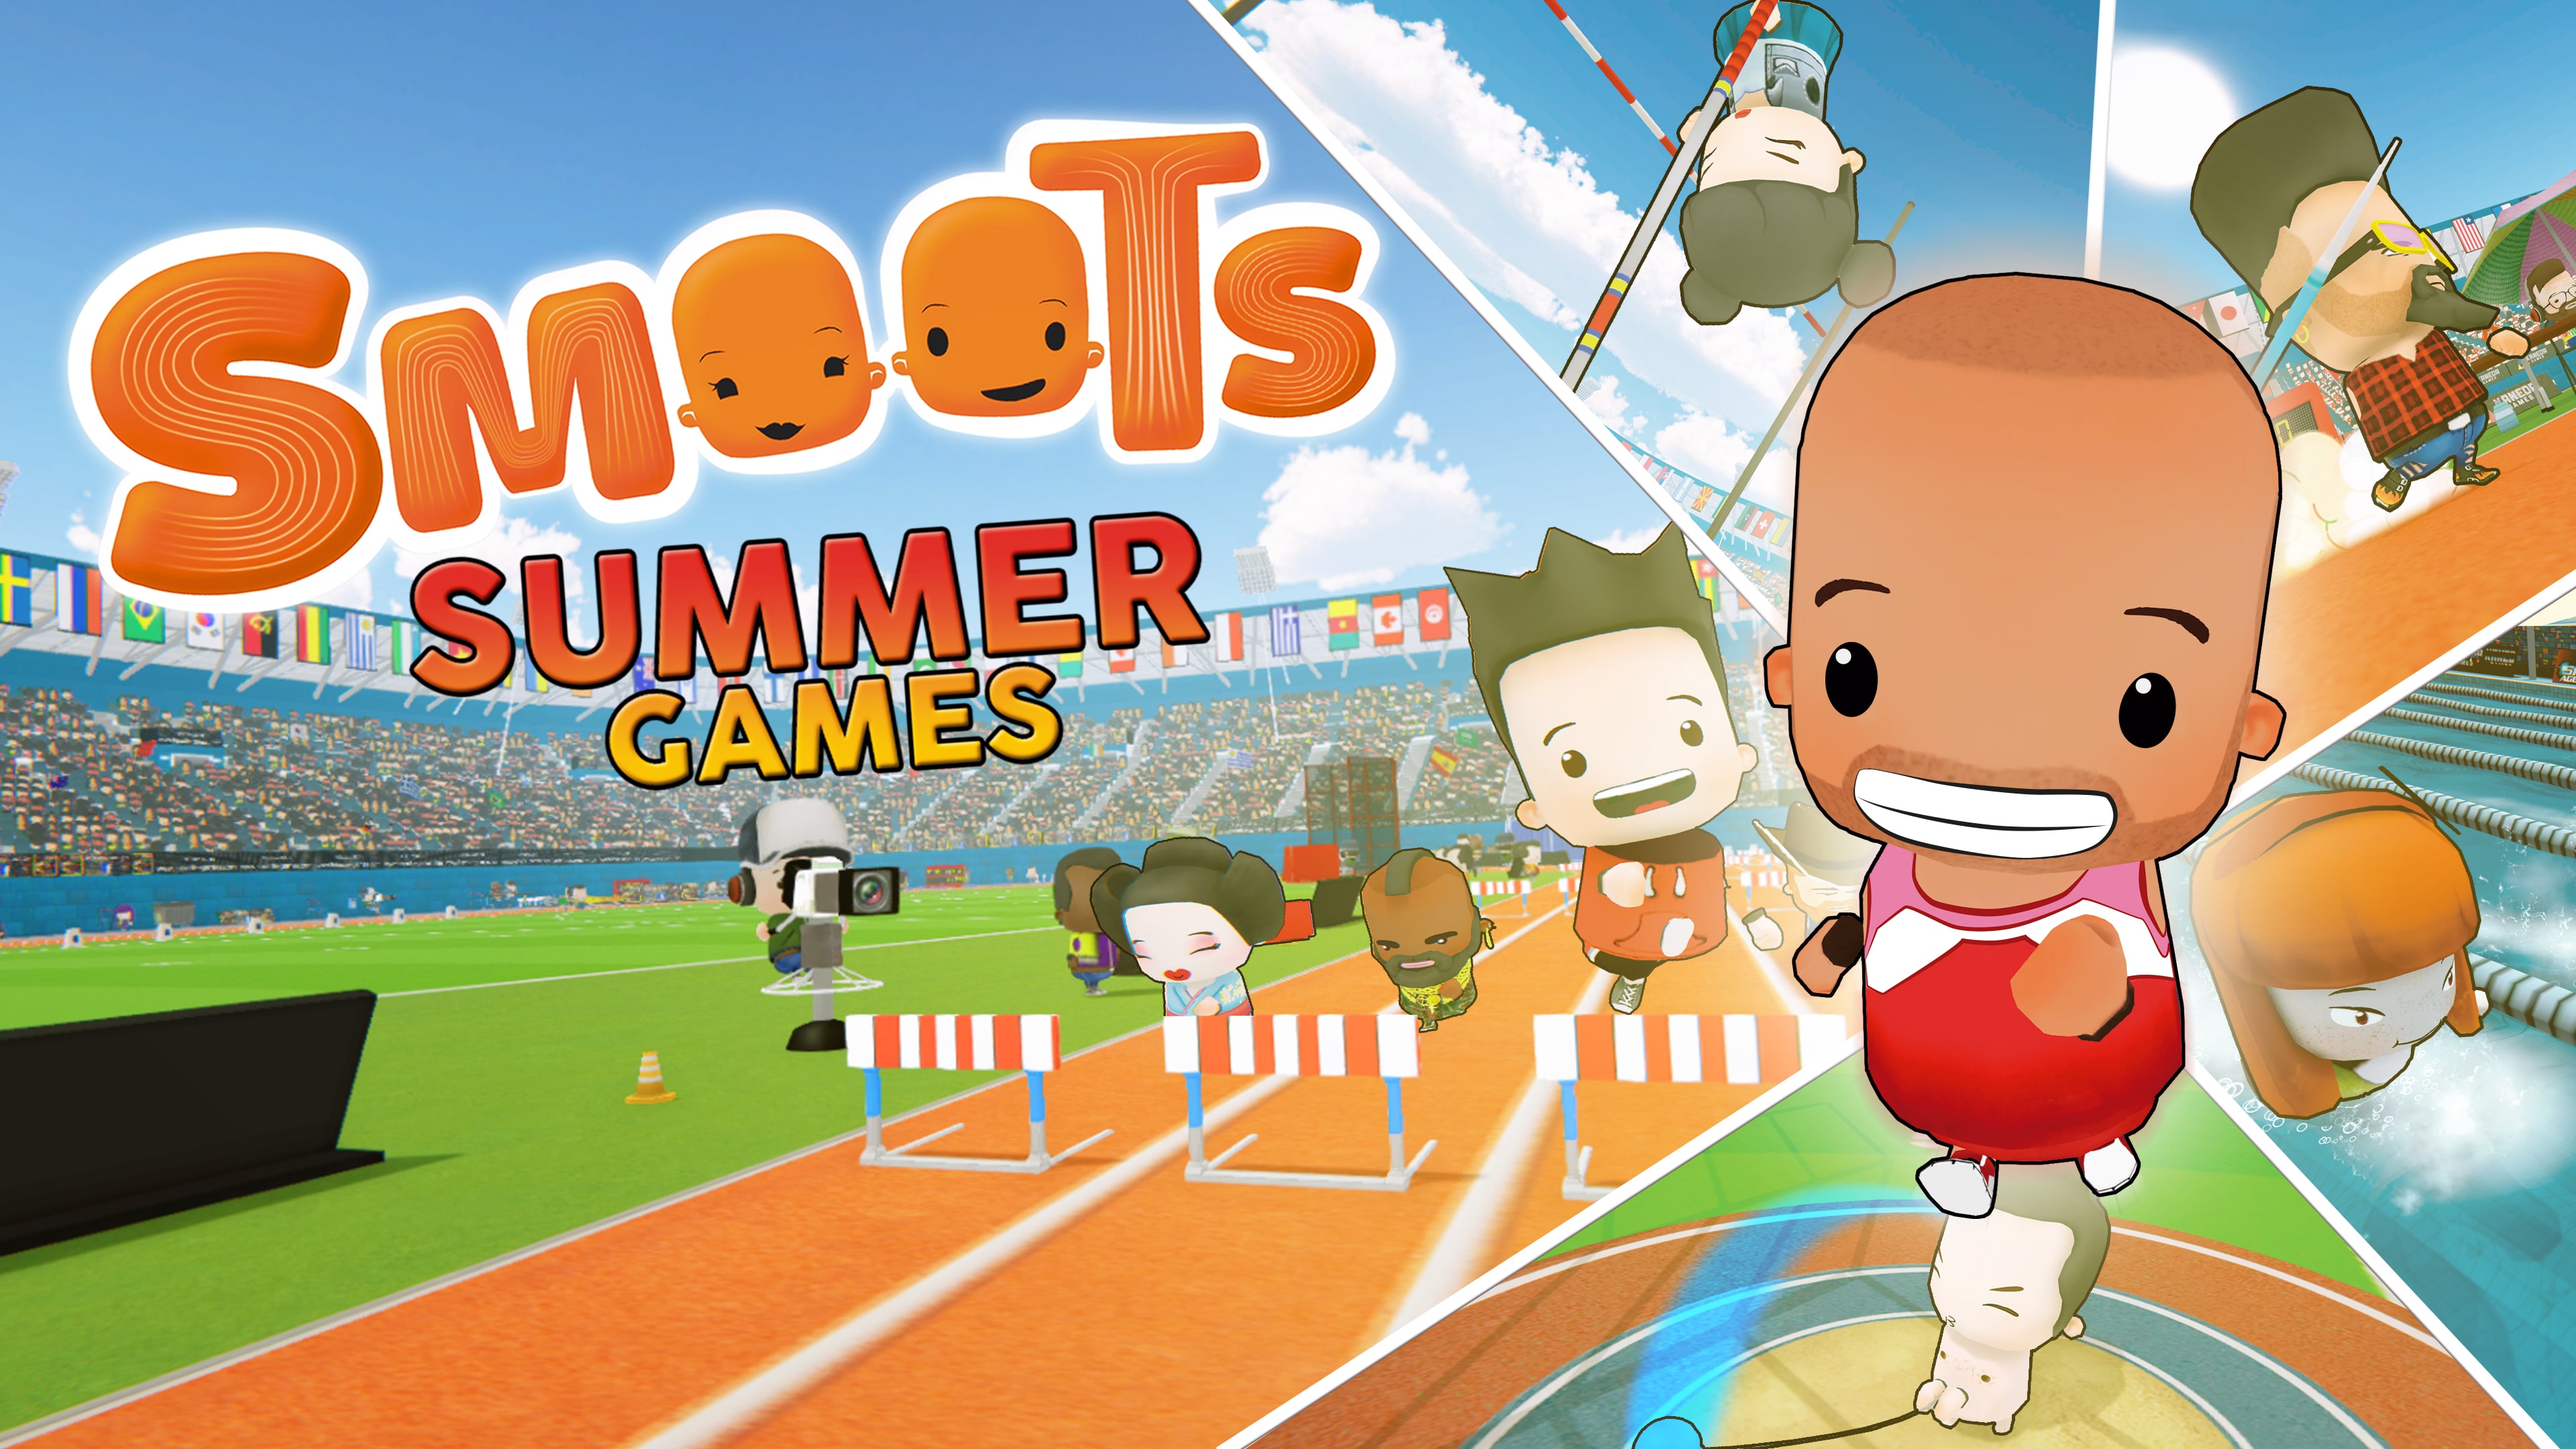 Smoots Summer Games (English/Japanese Ver.)